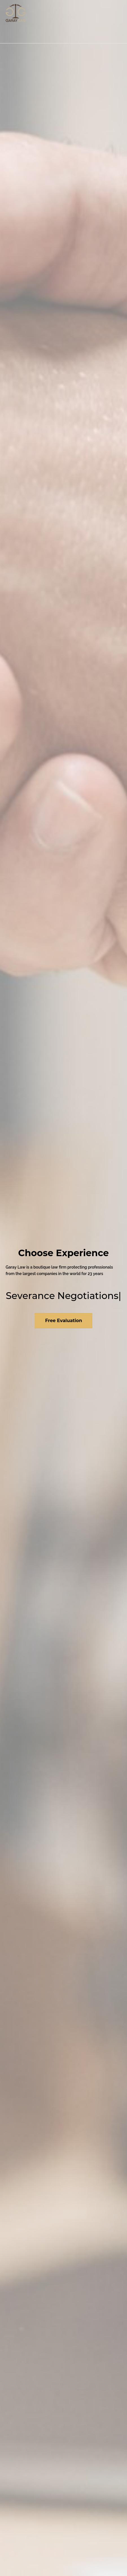 Garay Law - Long Beach CA Lawyers